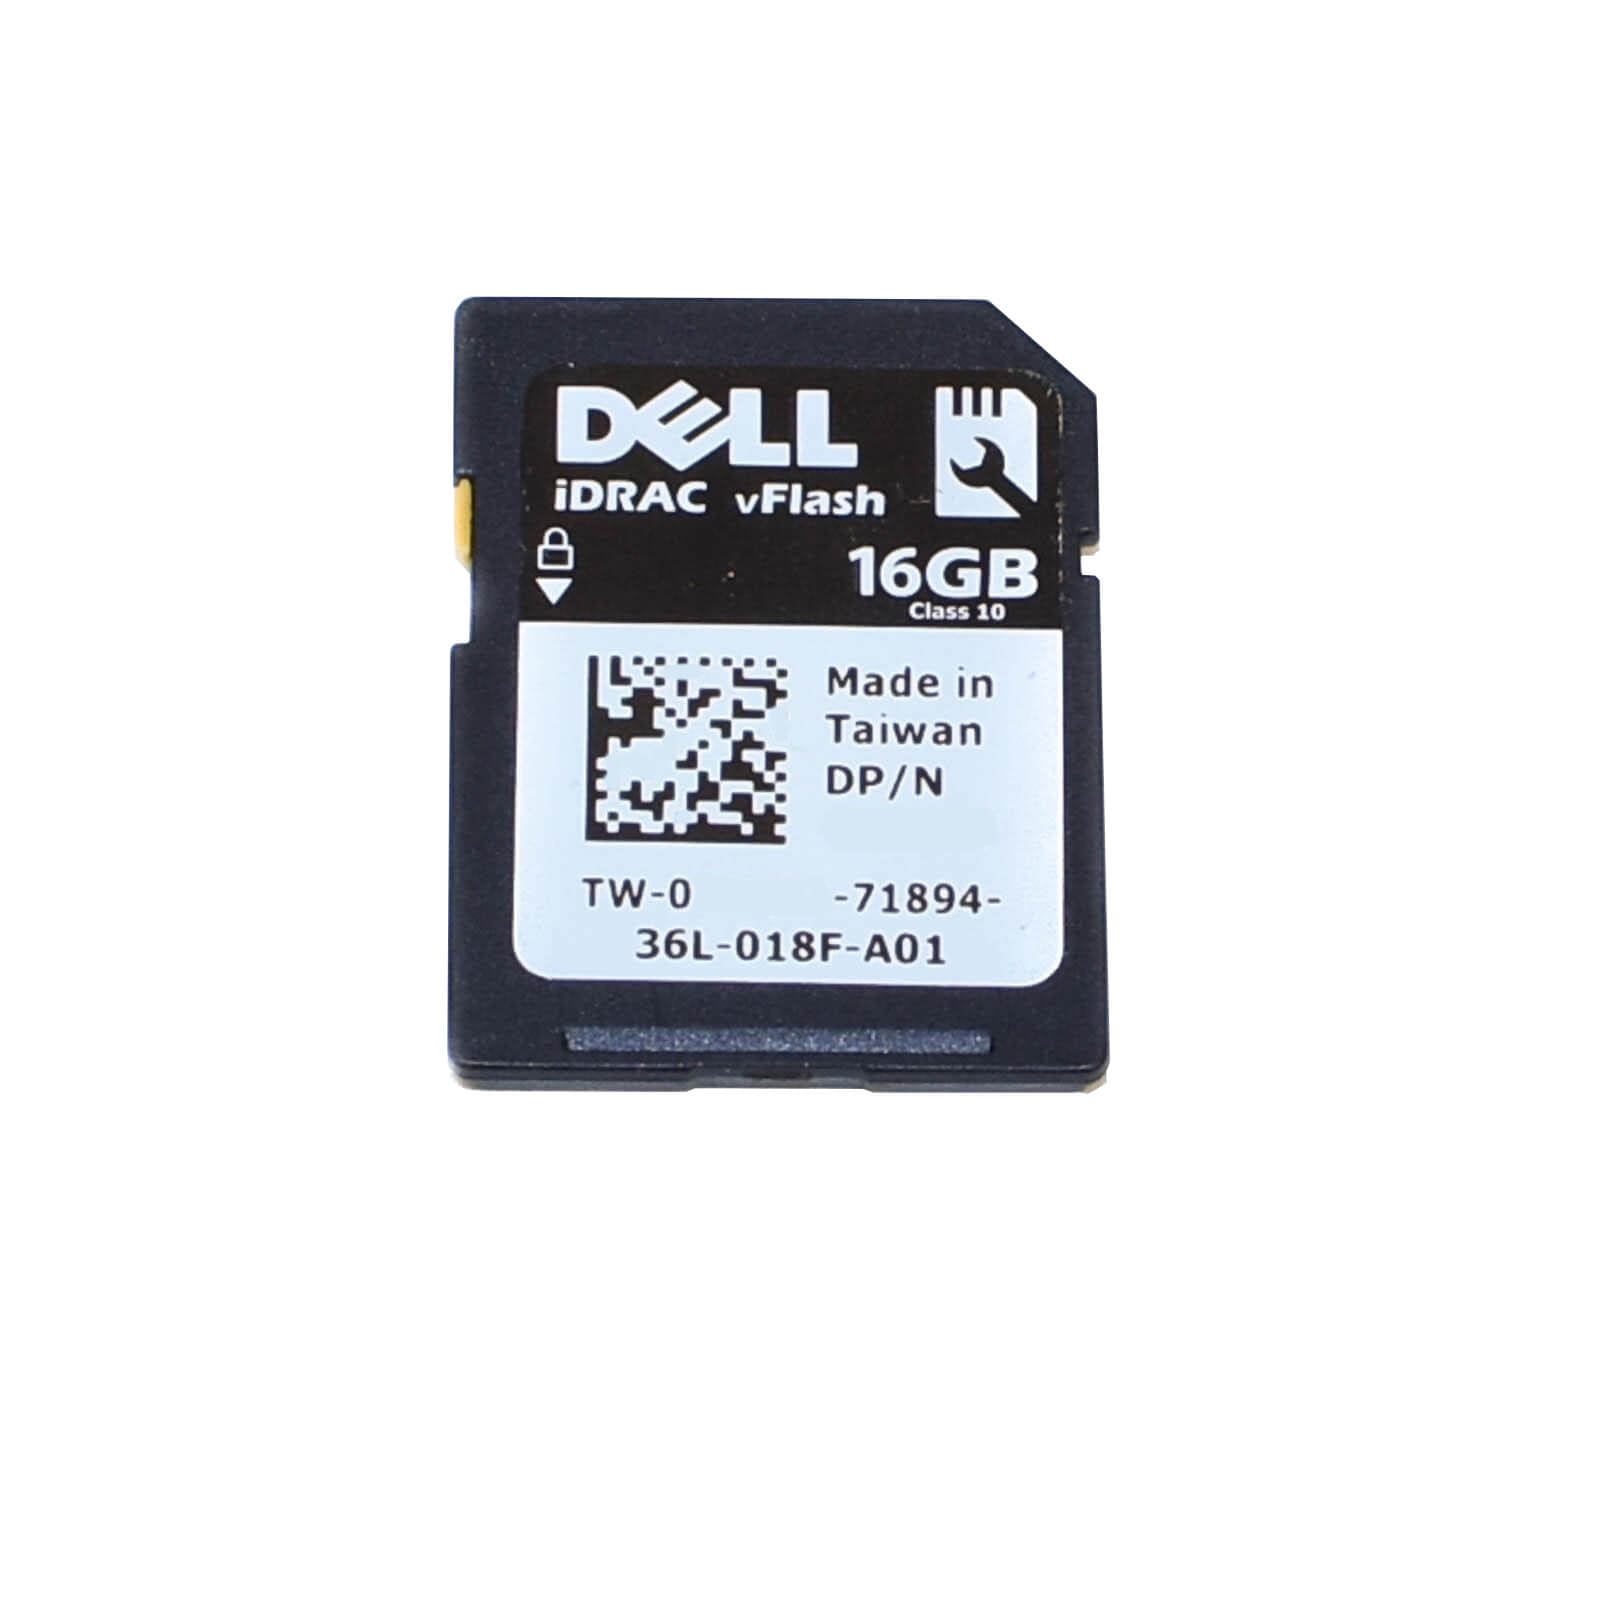 R710 New Dell RX790 1GB Flash SD Card Memory for Poweredge R610 R715,R810,R910 